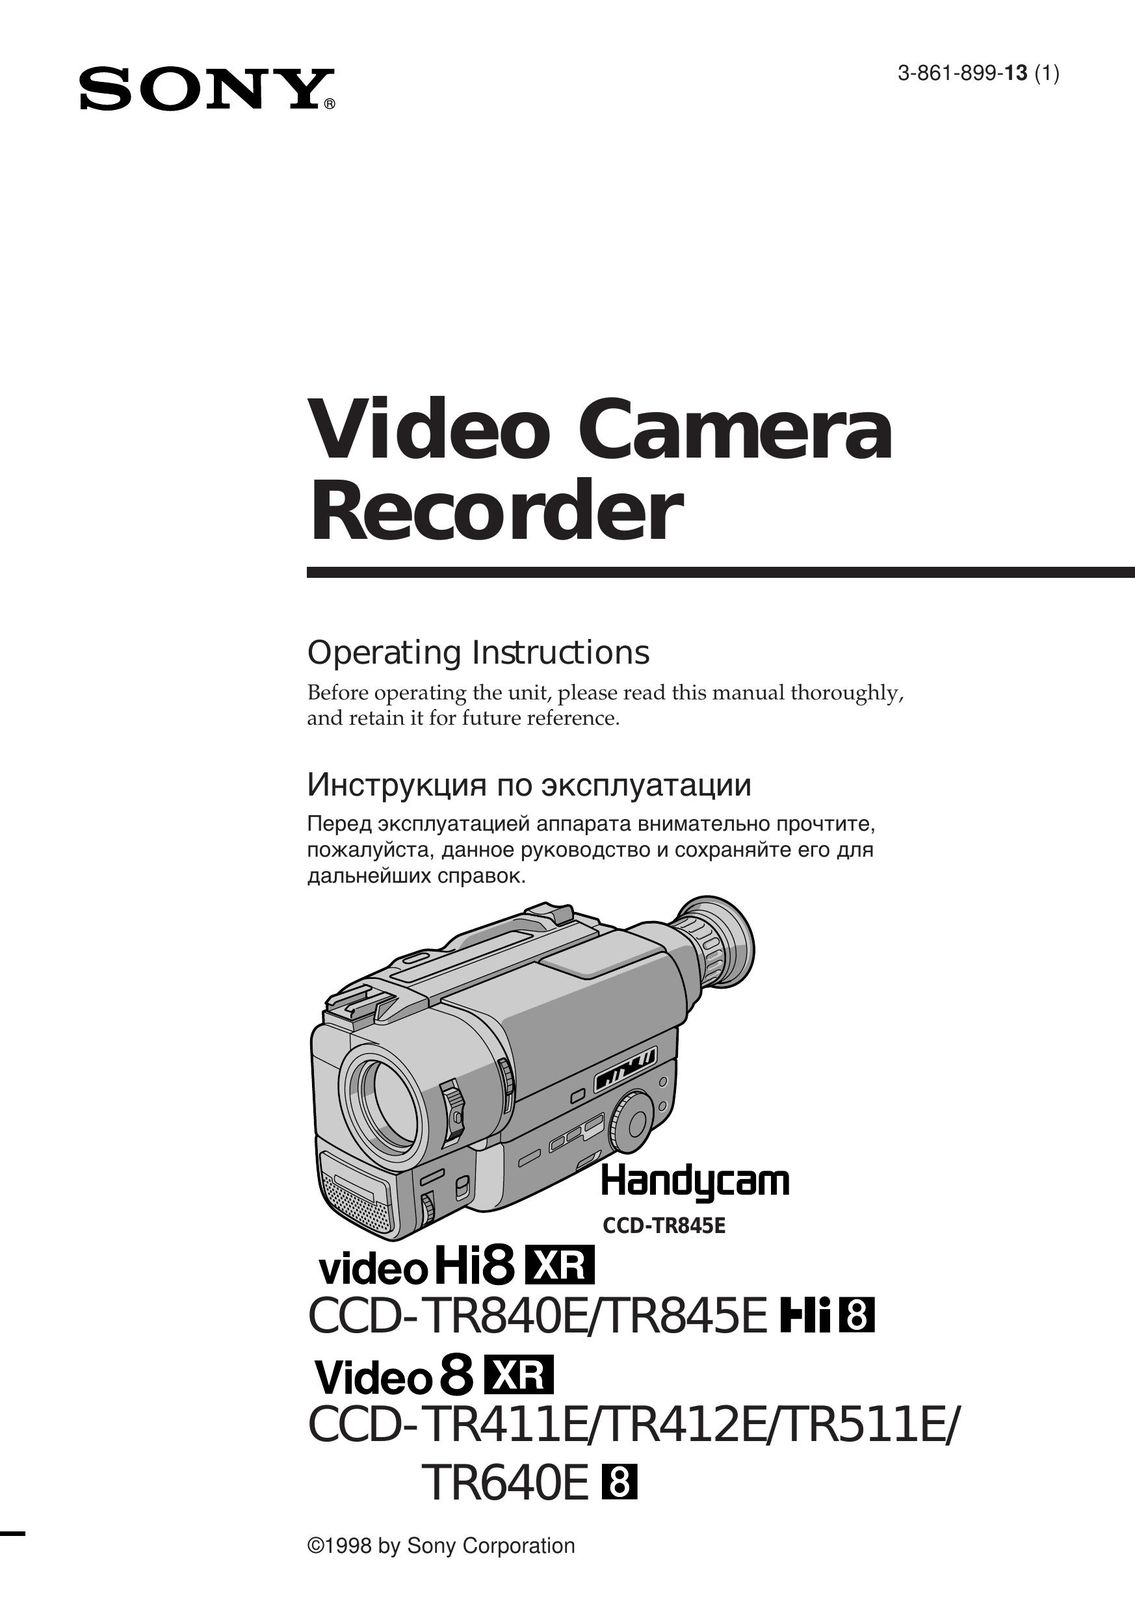 Sony CCD-TR411E VCR User Manual